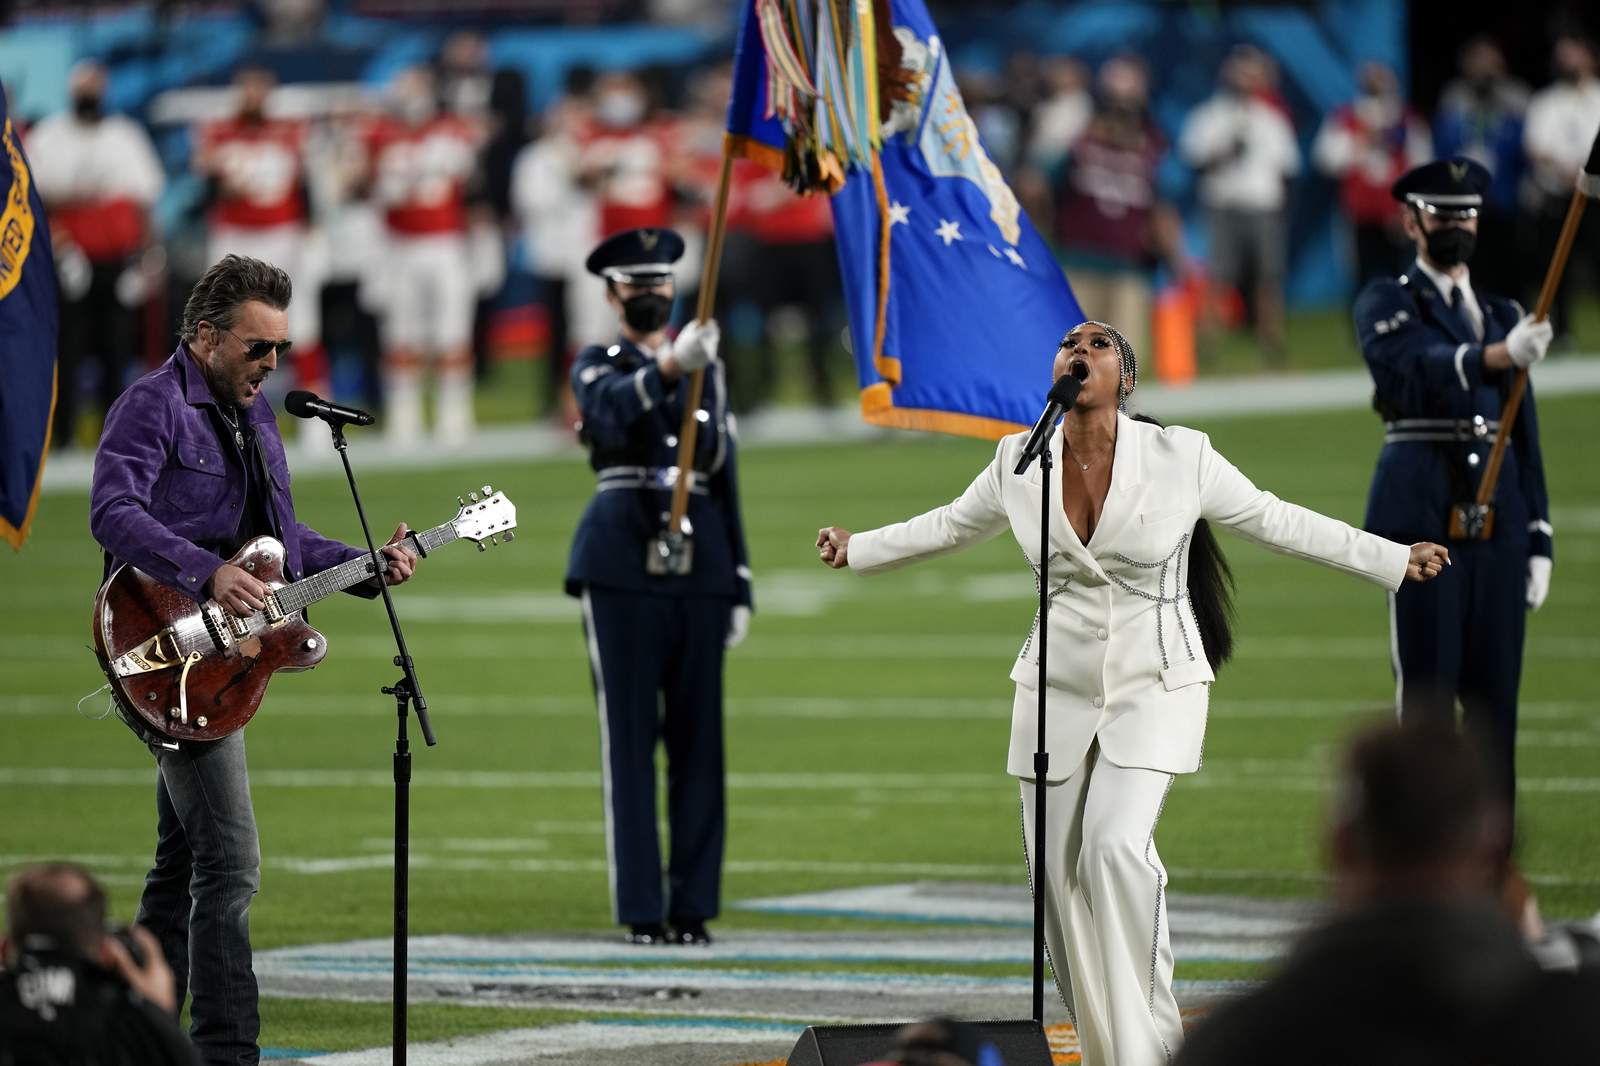 Relive the Super Bowl performances by Alicia Keys, Jazmine Sullivan, Eric Church and poet Amanda Gorman